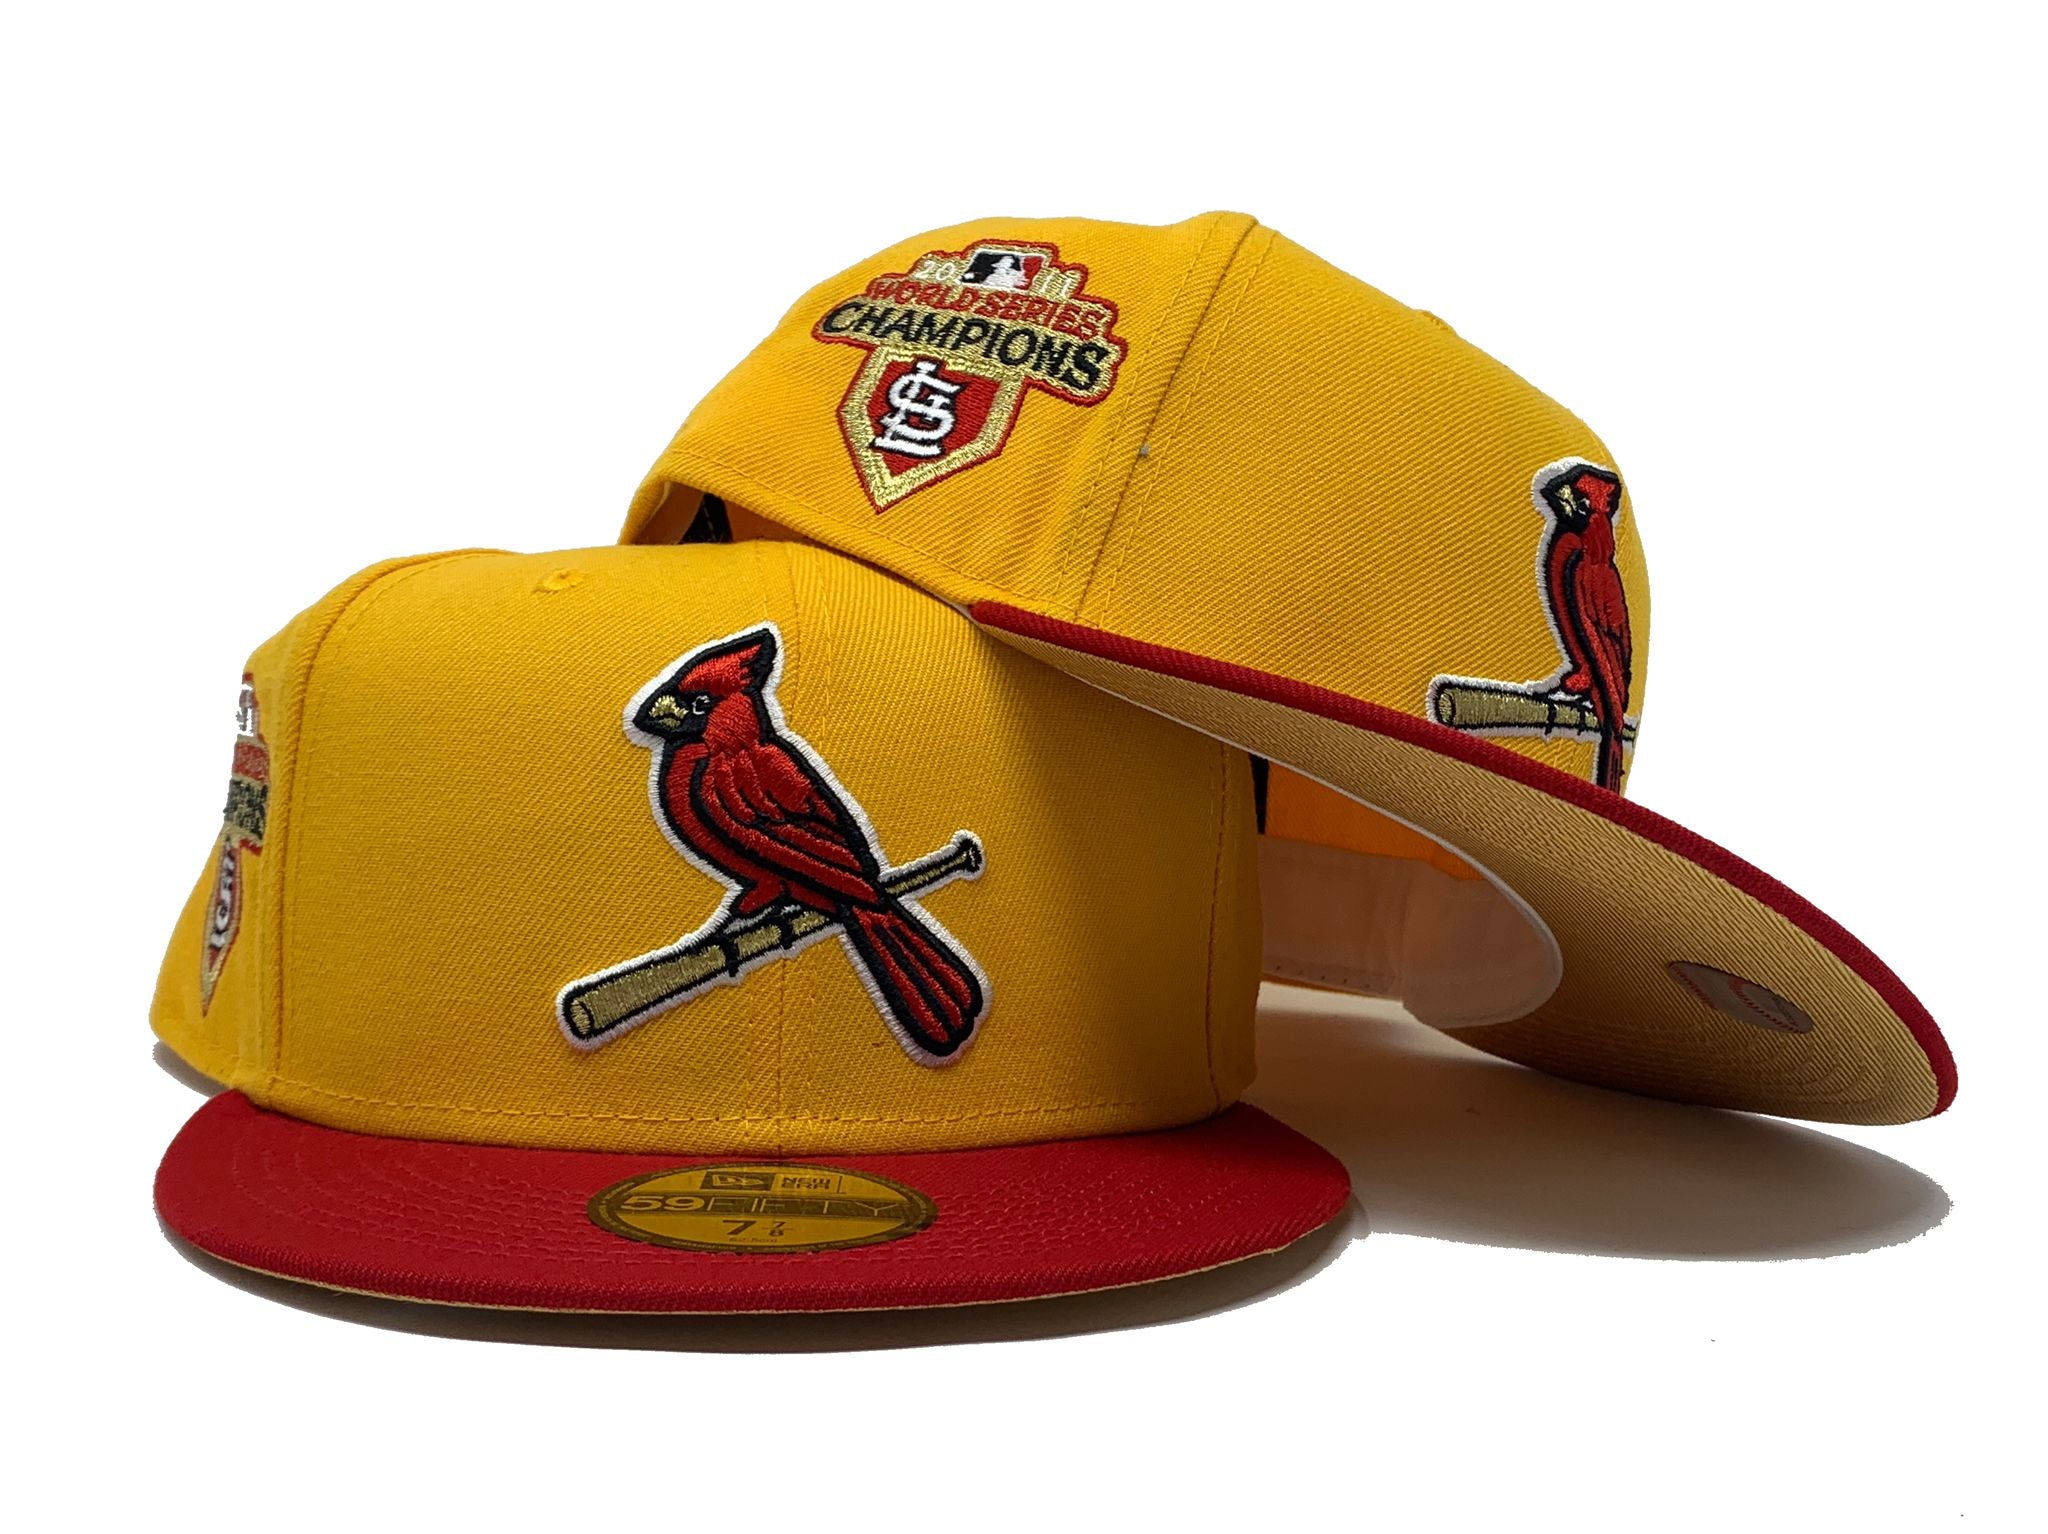 St. Louis Cardinals 2011 World Series Championship Shirt for Sale in  Atlanta, GA - OfferUp